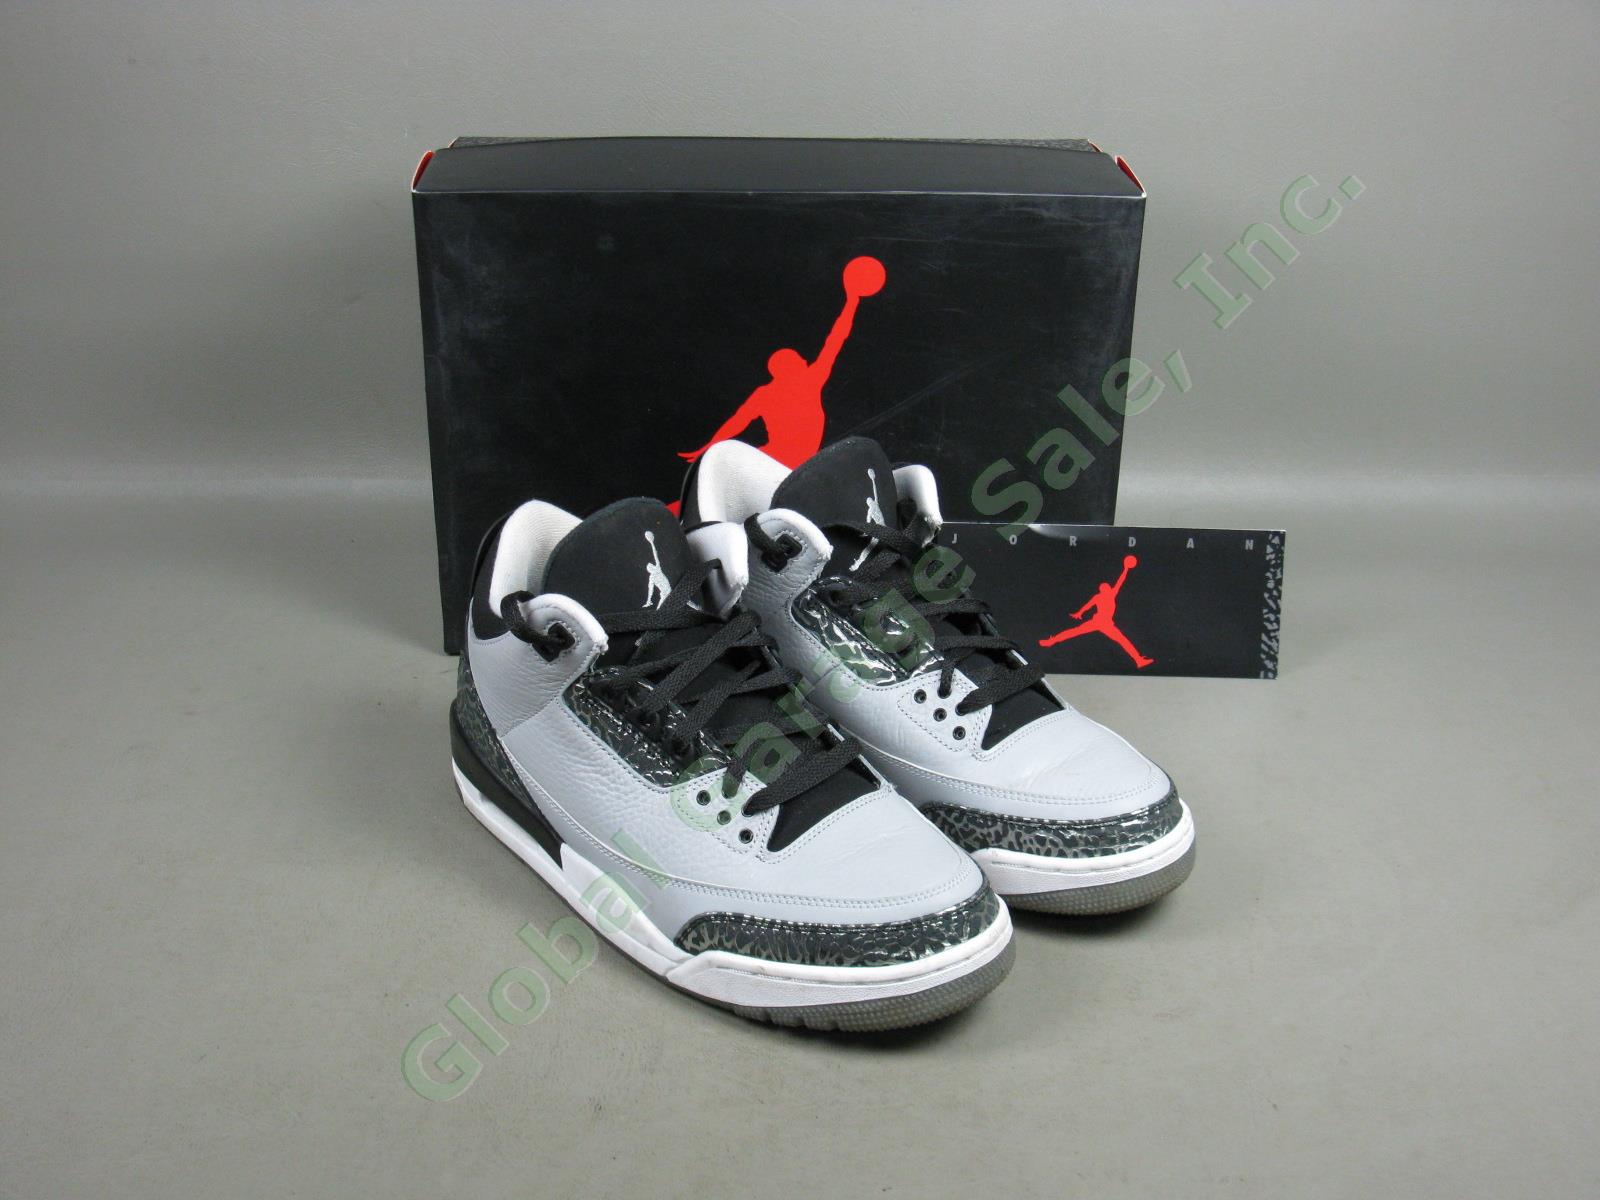 Nike Air Jordan 3 Retro Wolf Grey Basketball Shoes Size US 9 EUR 42.5 136064-004